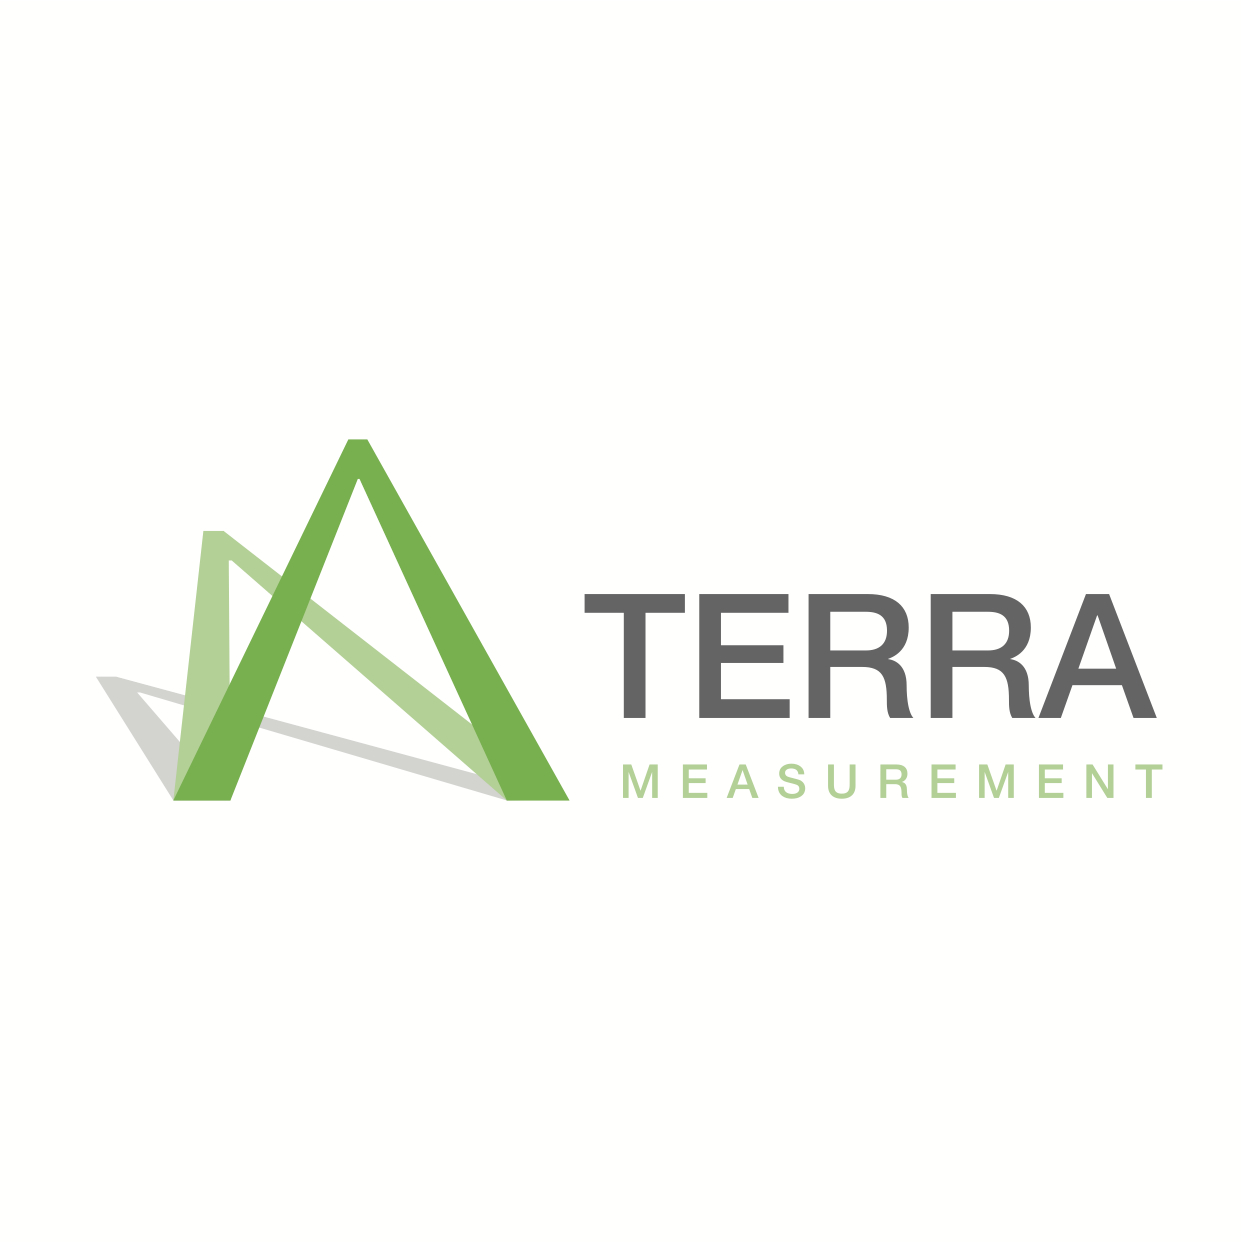 Terra Measurement Limited